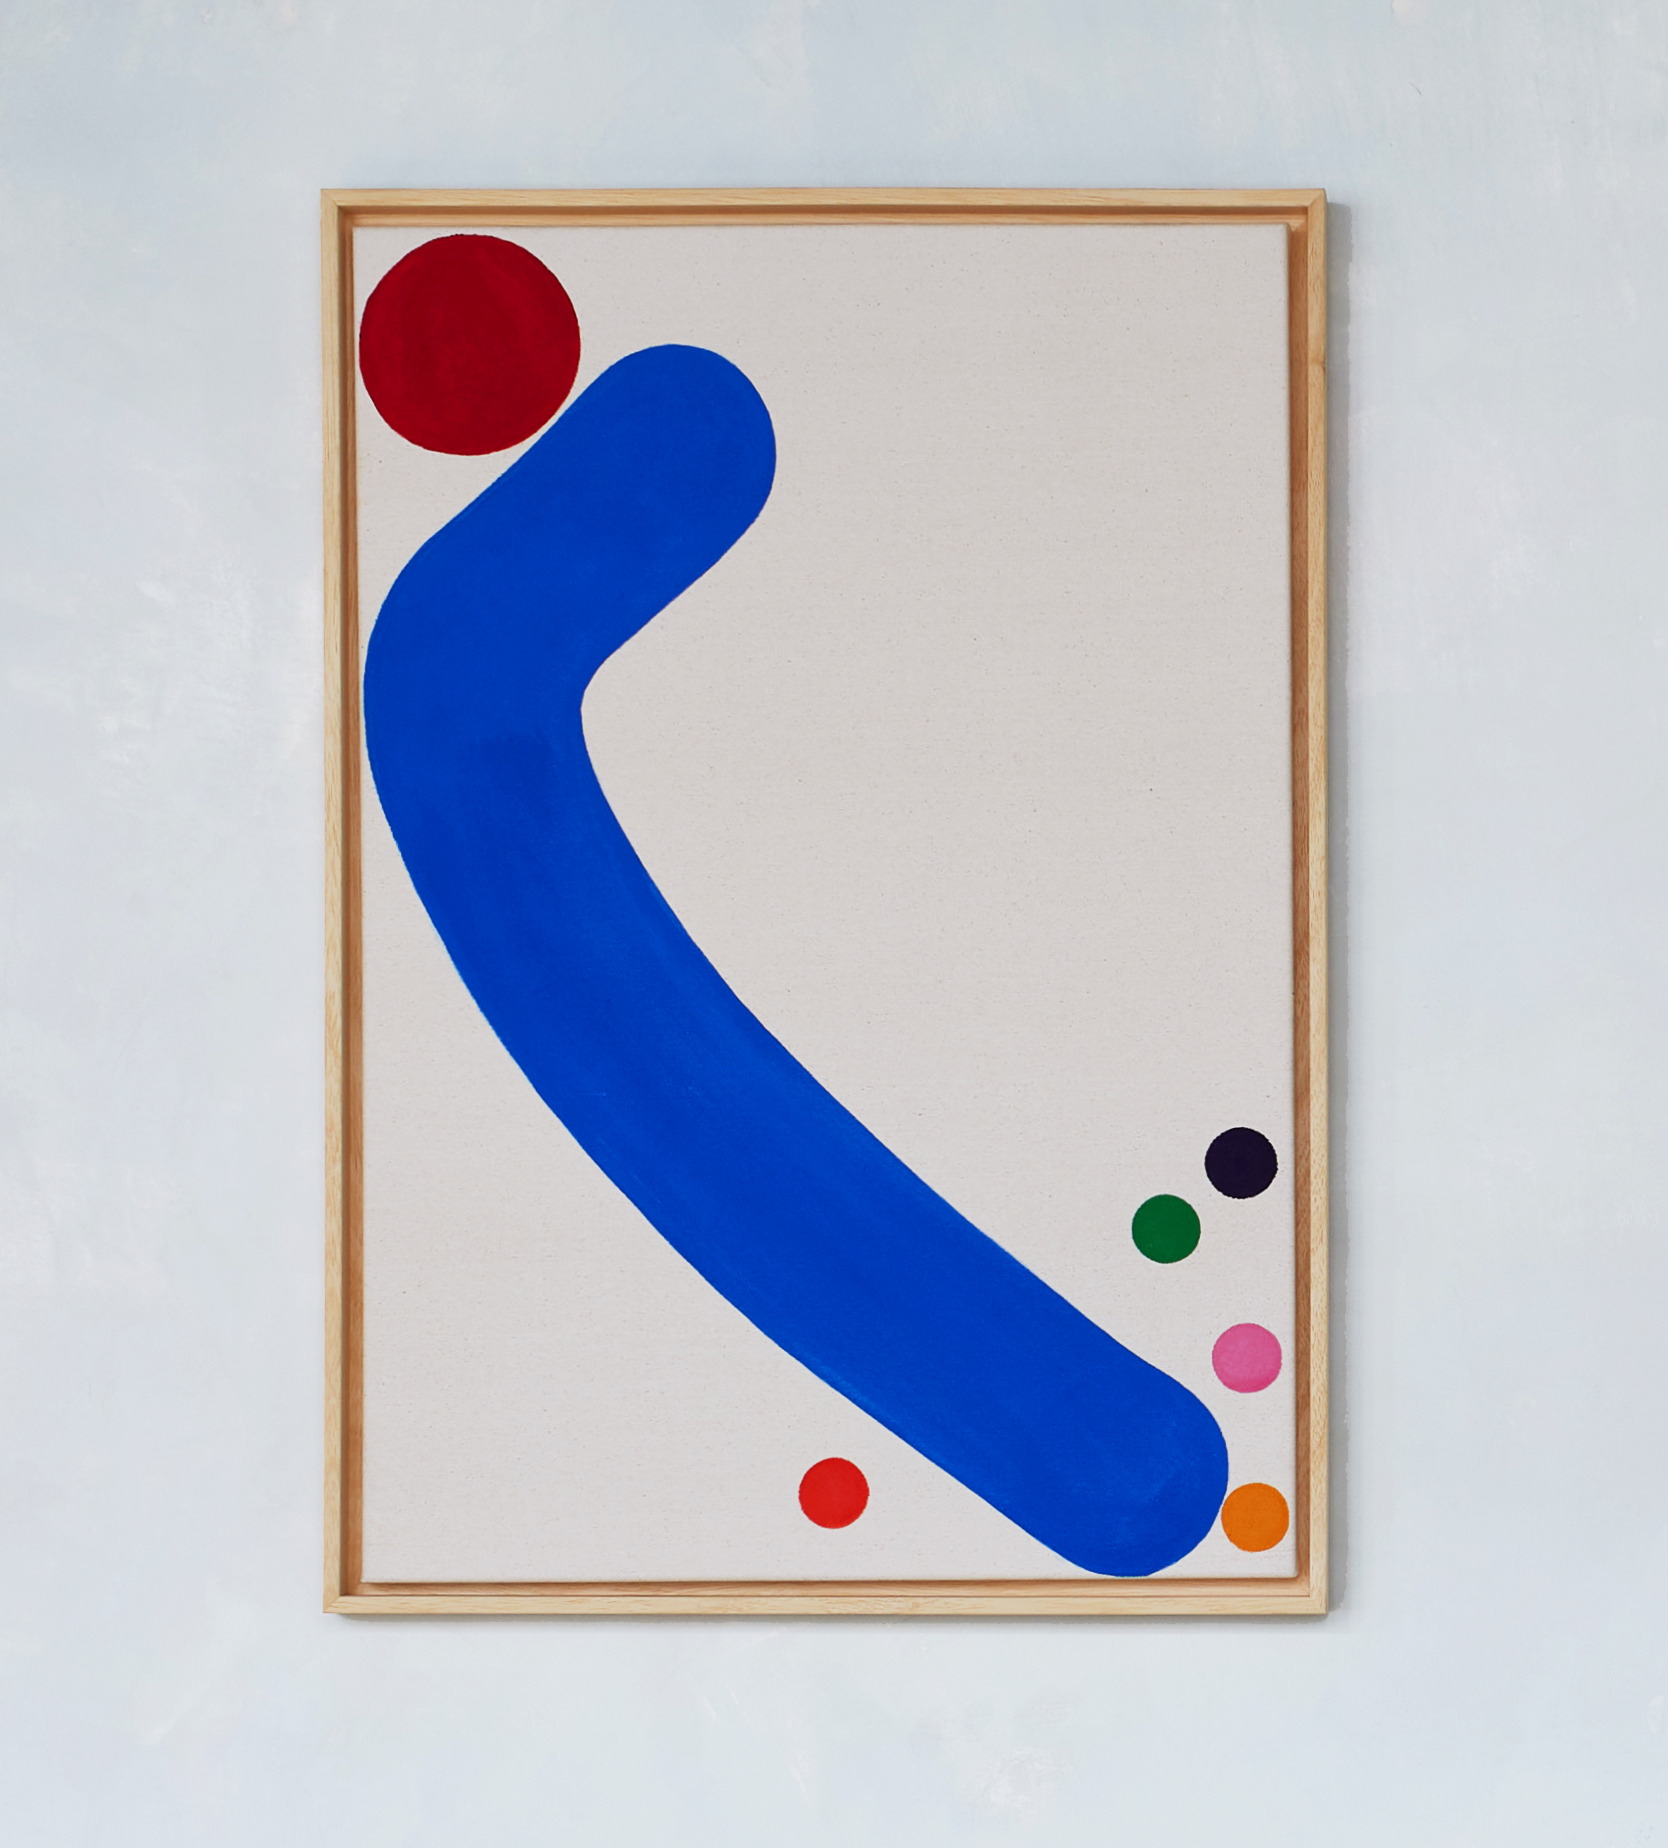 Stanislav Ondruš “To the corner” 2022 80 cm x 55 cm acrylic on canvas